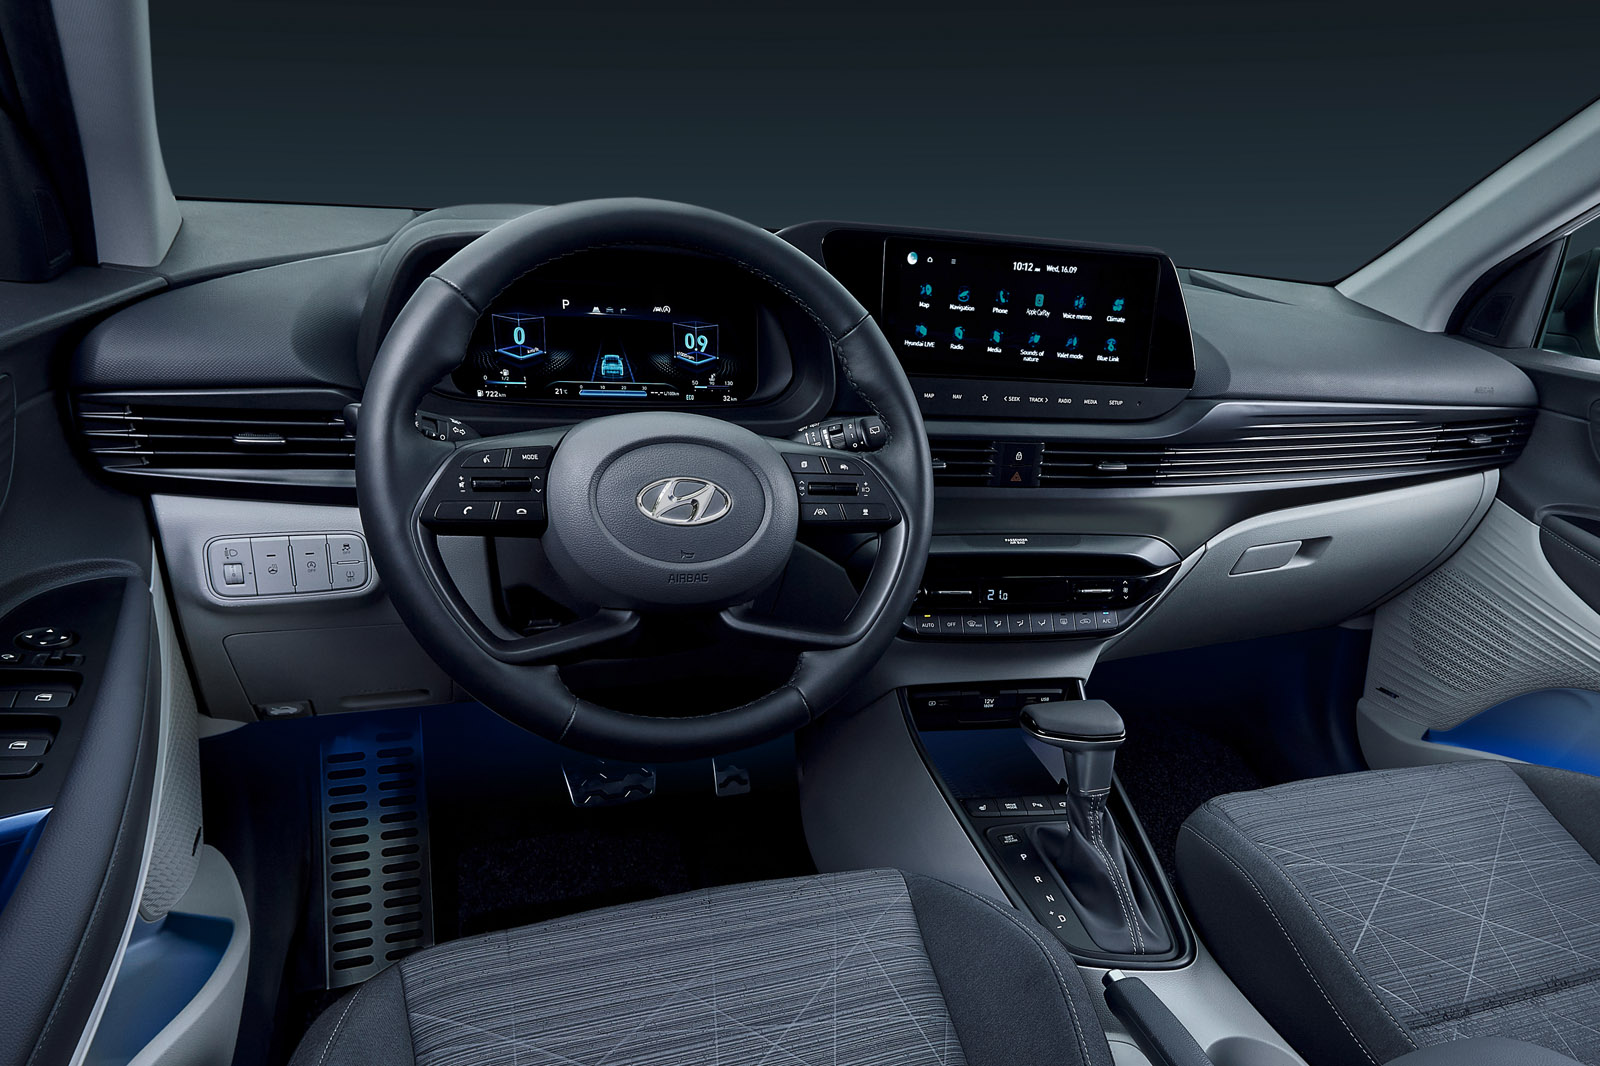 New 2021 Hyundai Bayon revealed as entry-level SUV